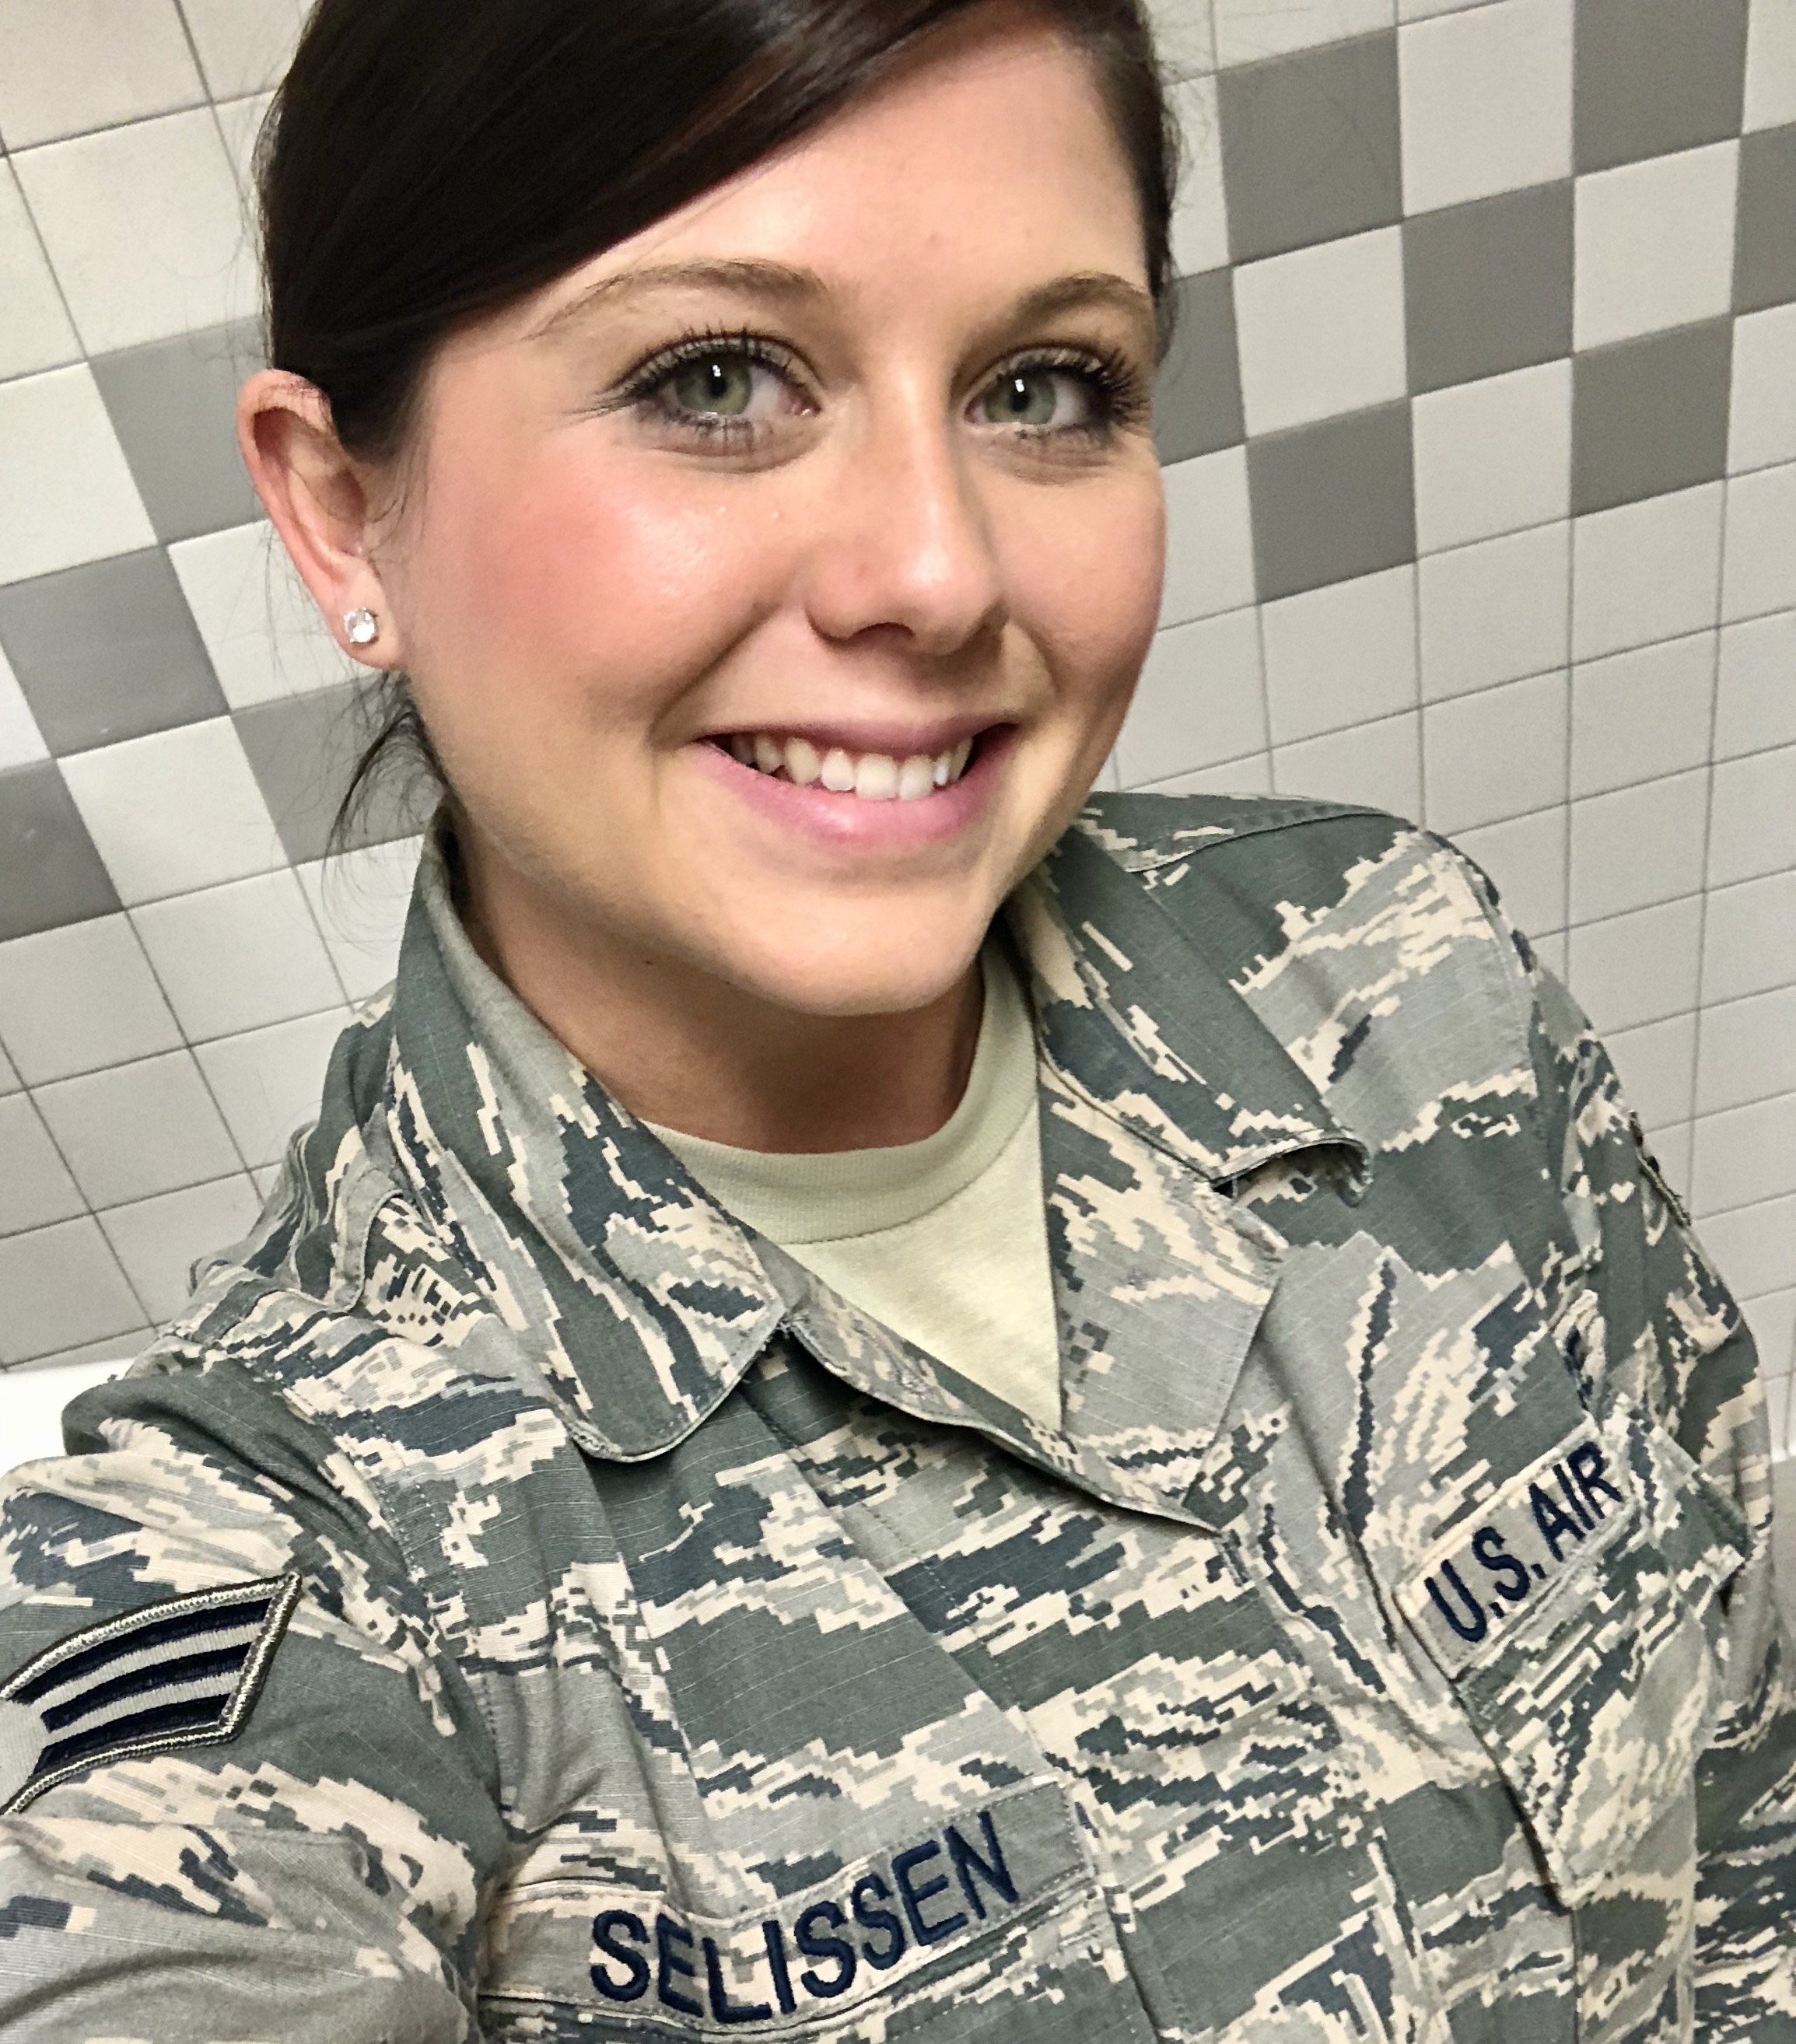 Selissen in her Air Force uniform